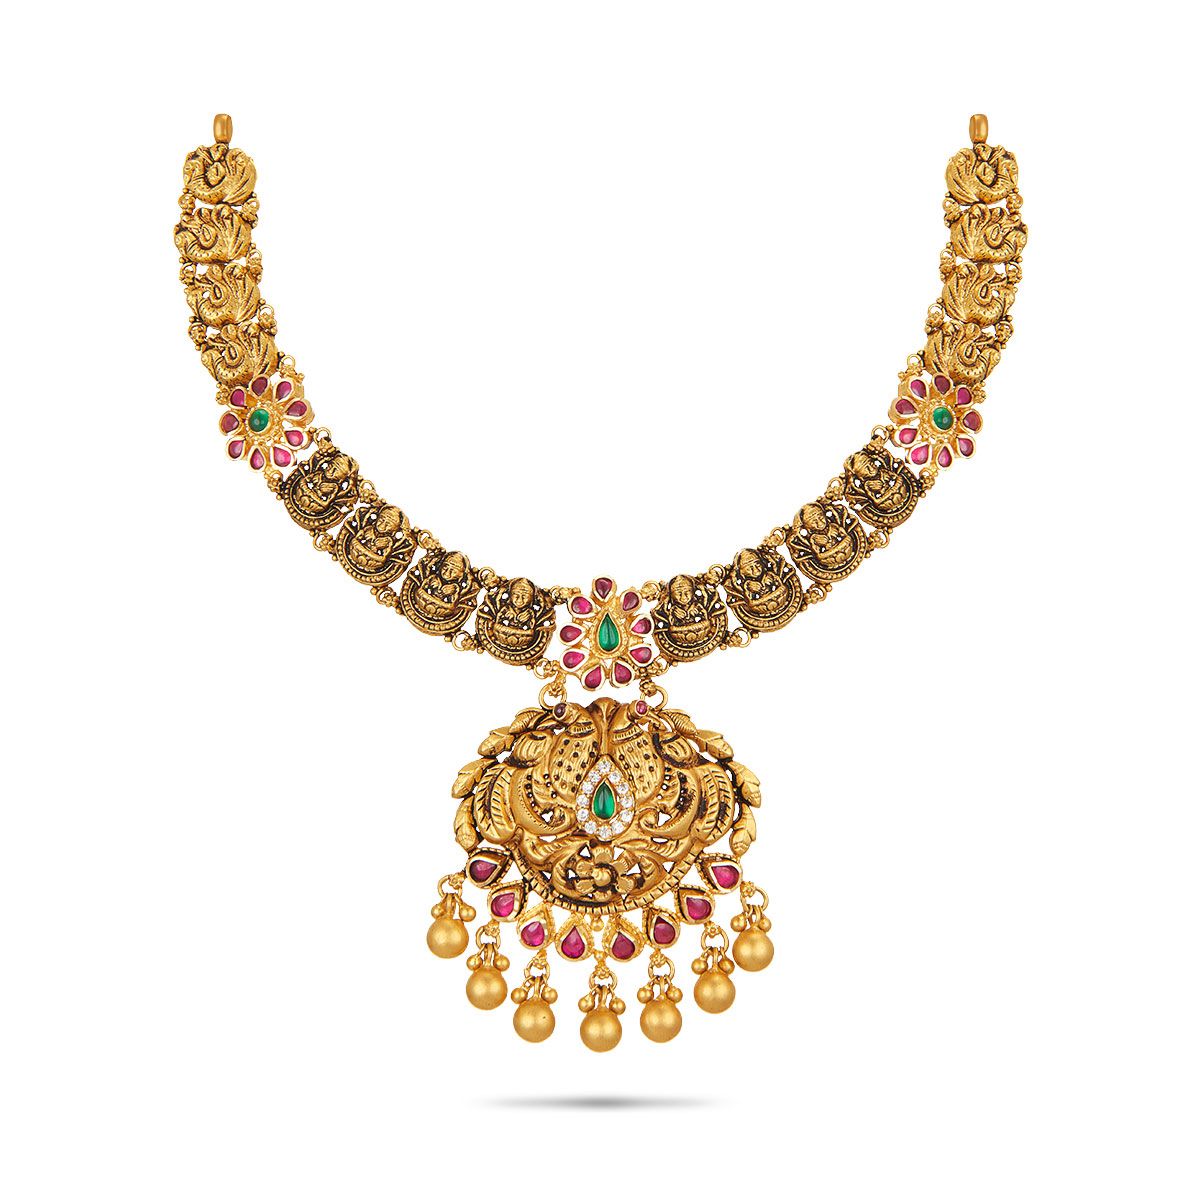 Royal Antique Peacock Necklace